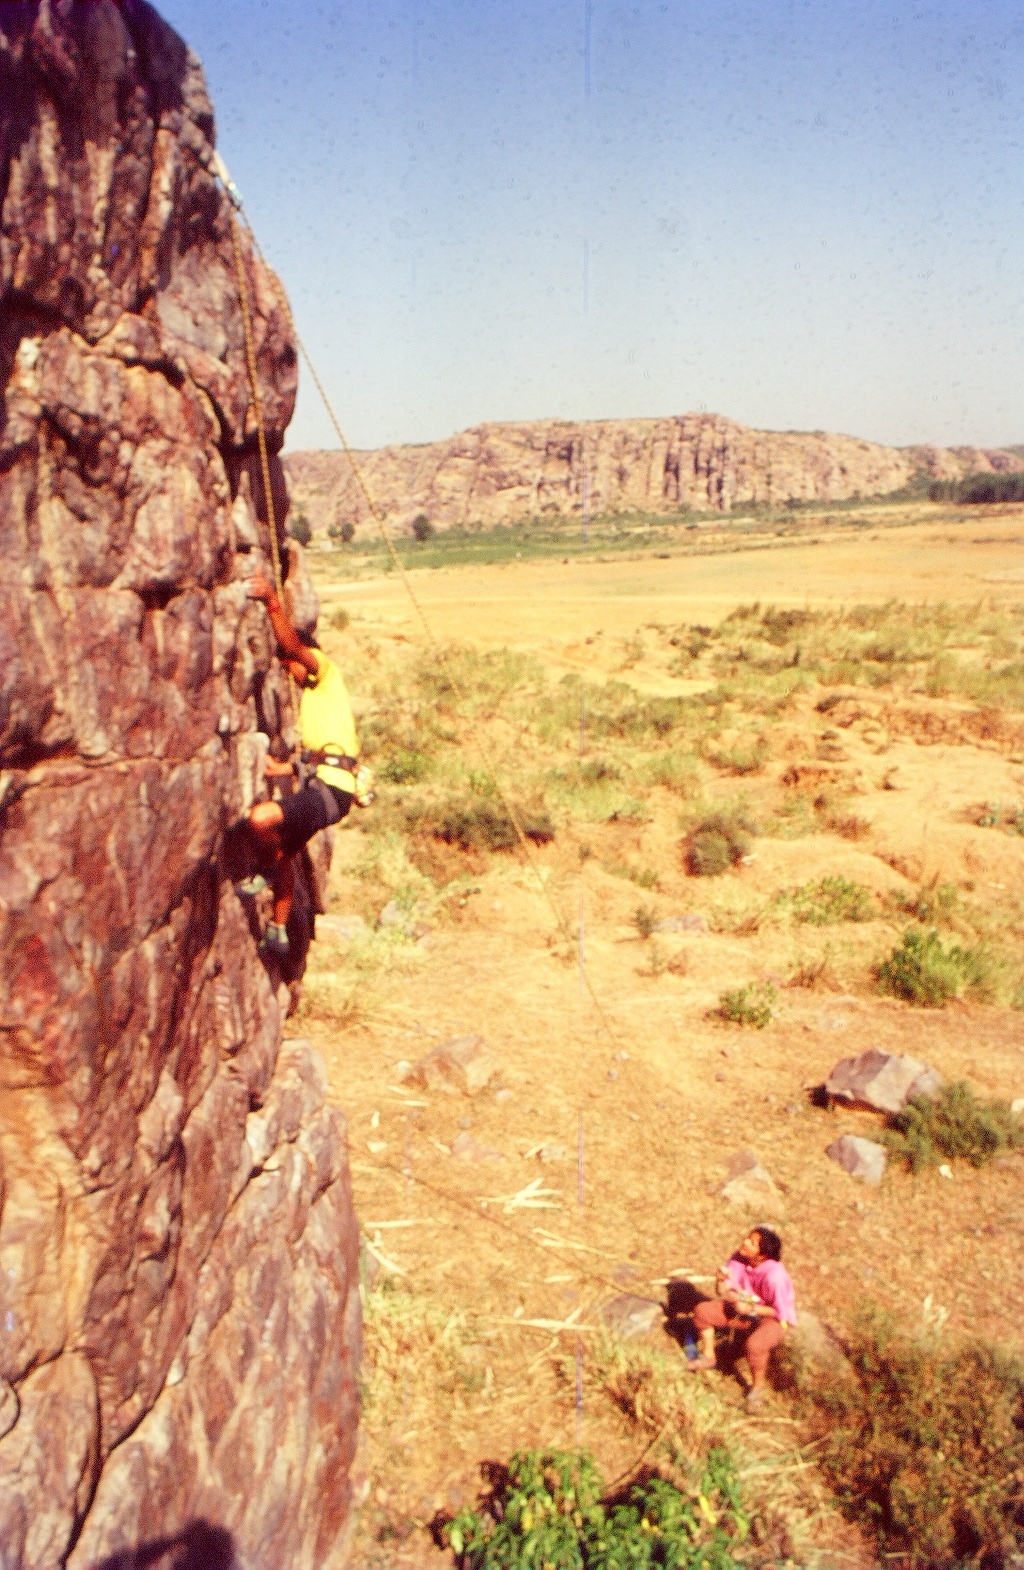 Annie Jacob climbing "Short Haired Civilian", a 5.10c R and 30 feet high route in the Pantheon Rocks area. Image © Raghav Sundar